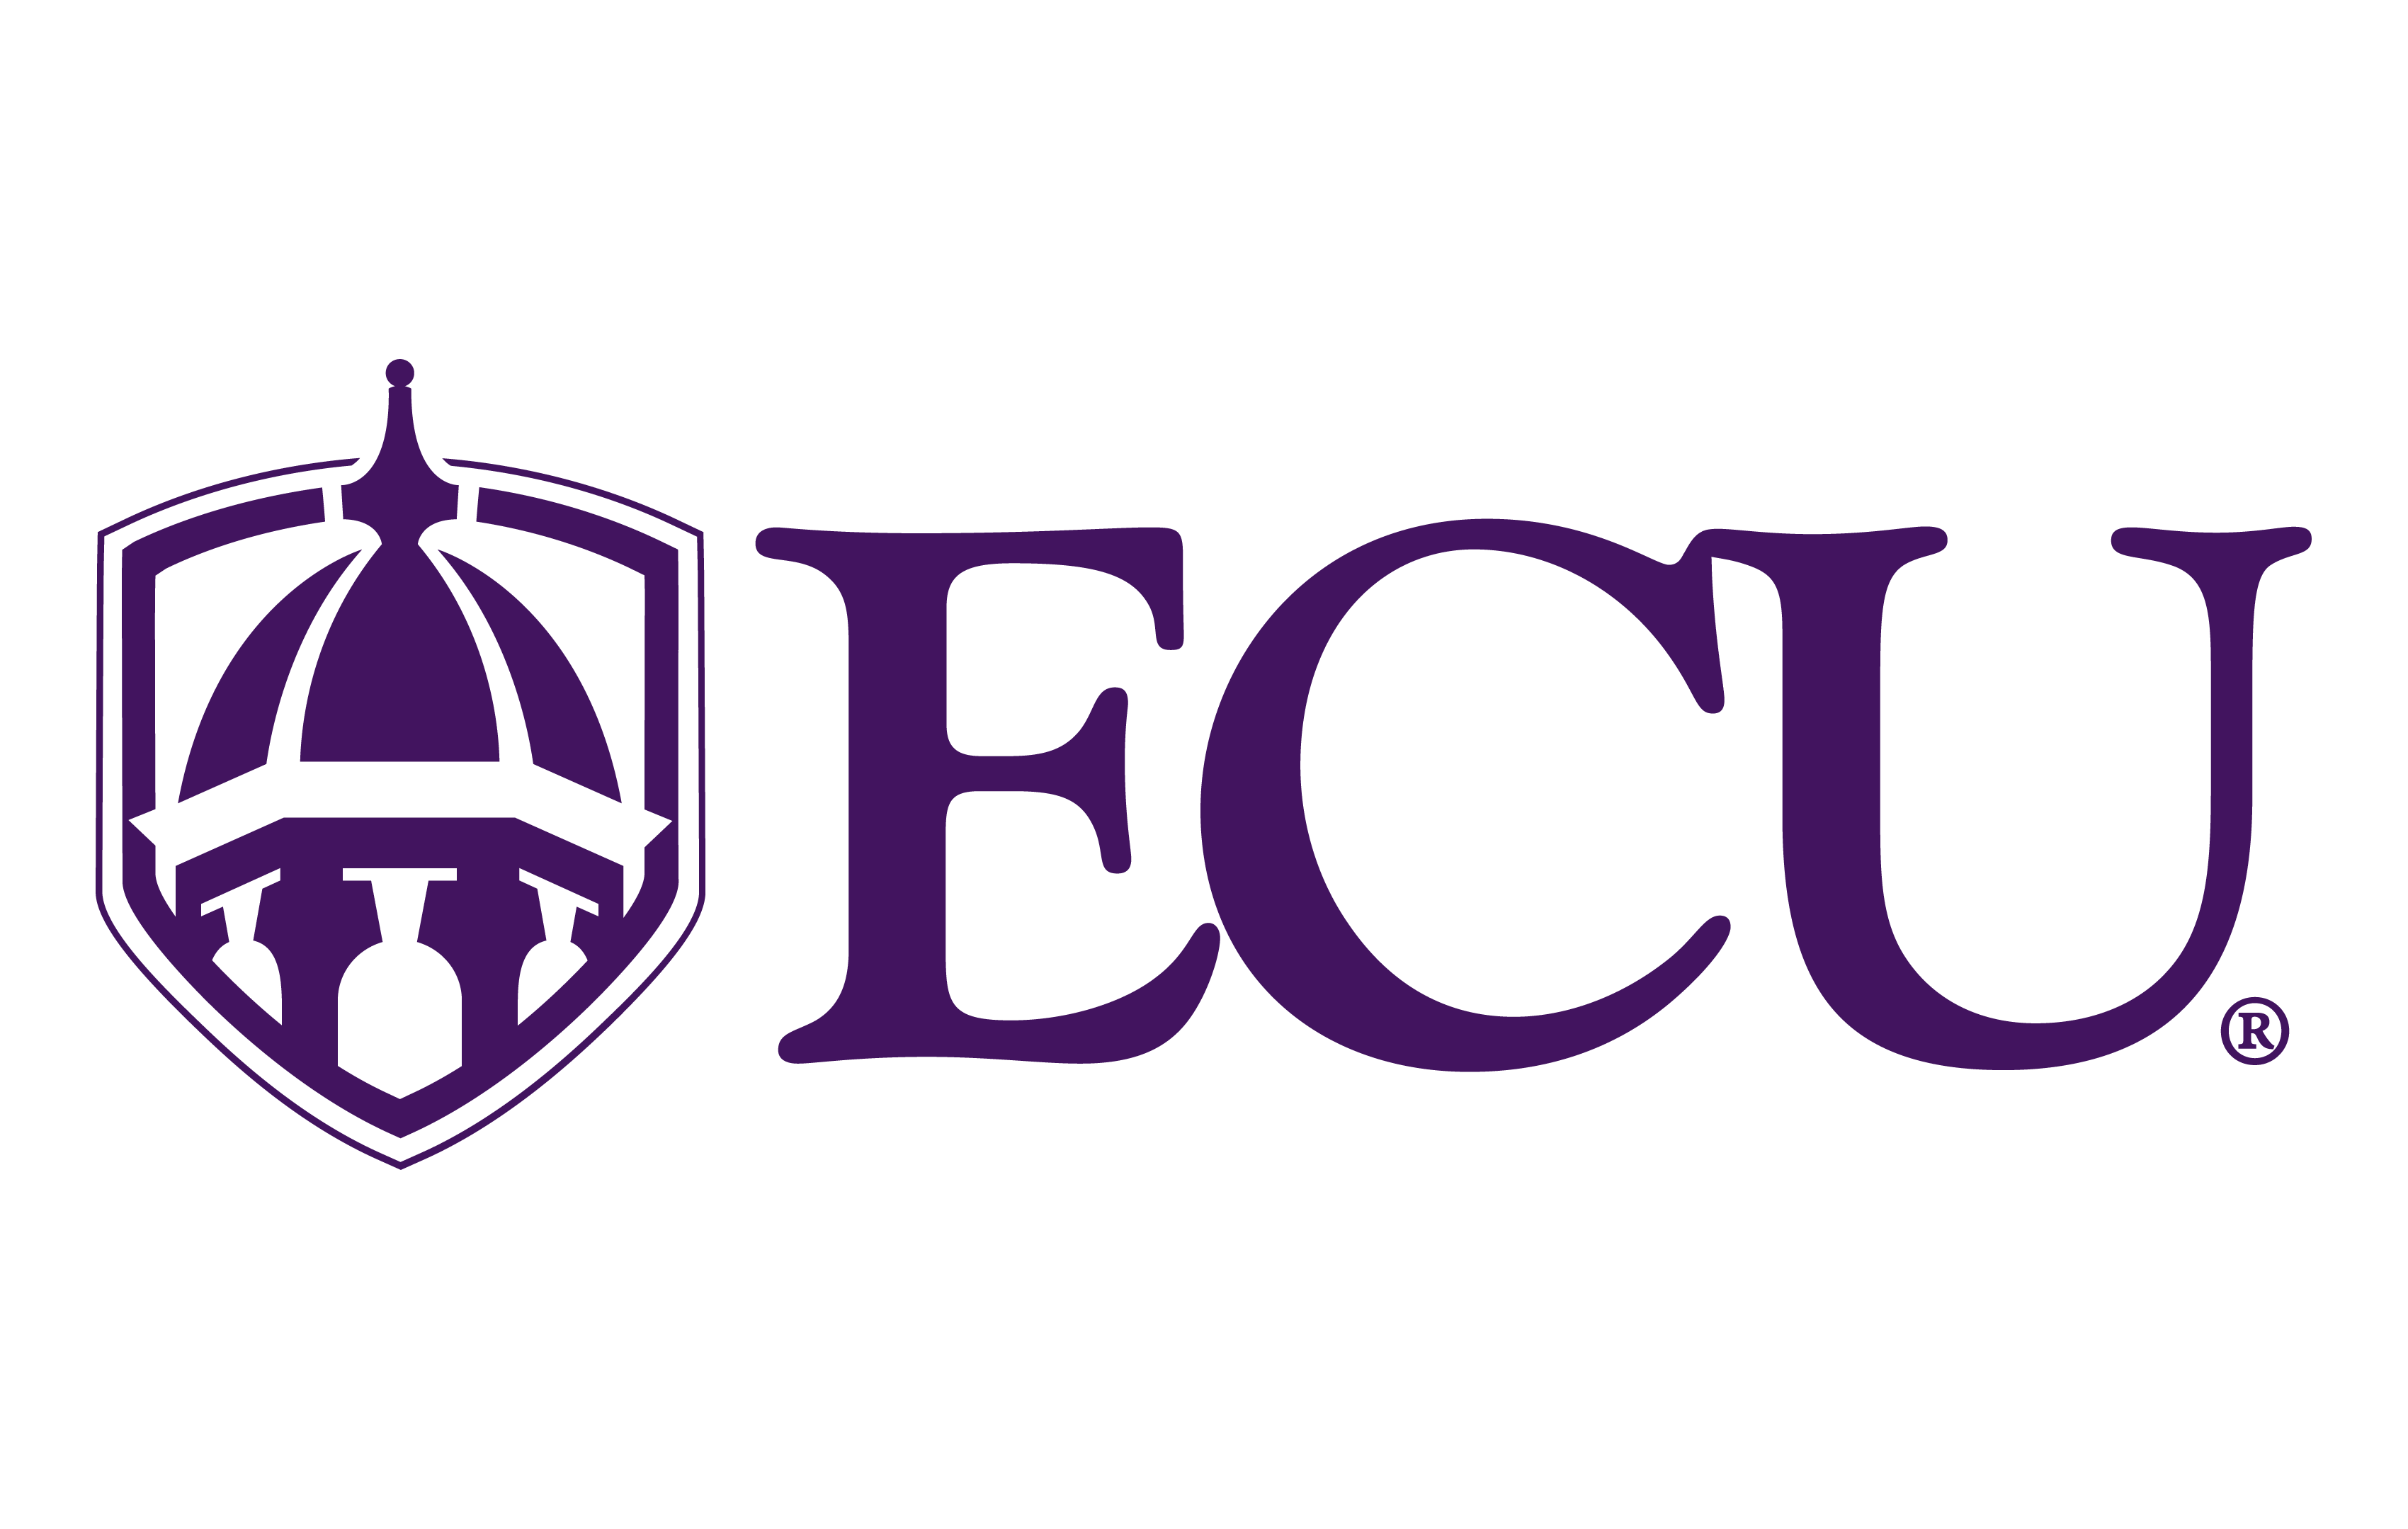 East Caroline University logo